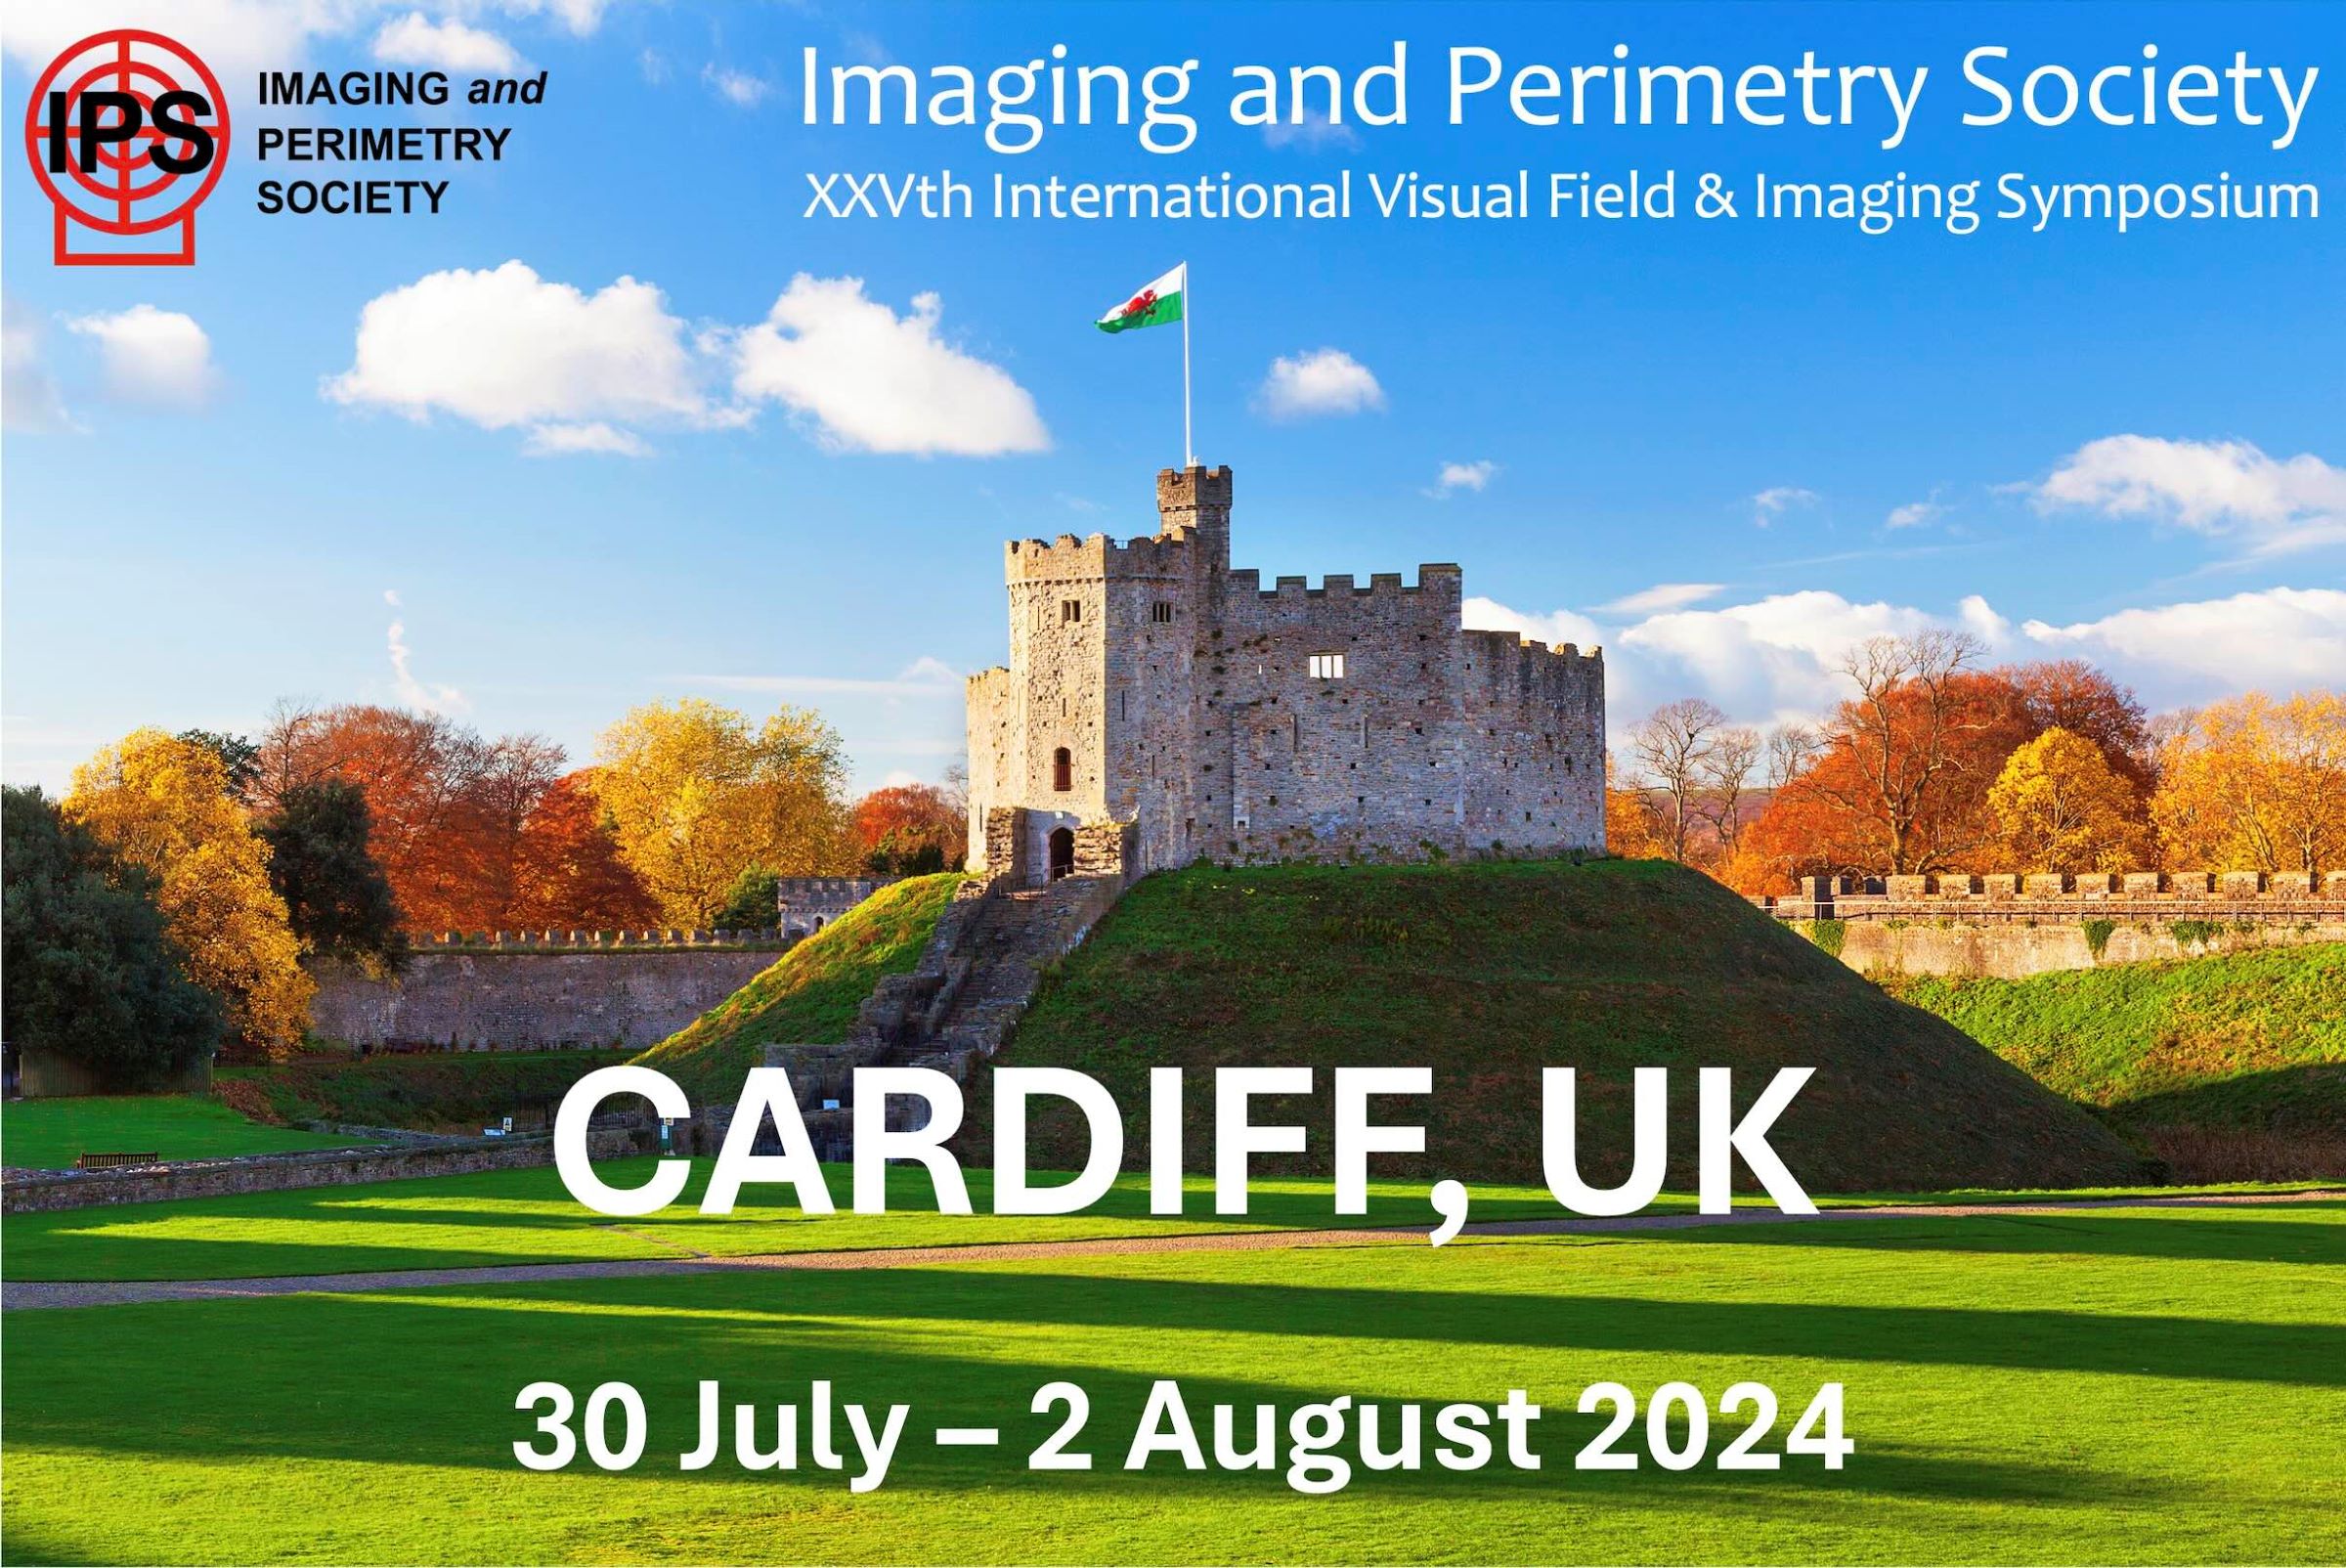 Imaging and Perimetry Society (IPS) XXVth International Visual Field & Imaging Symposium